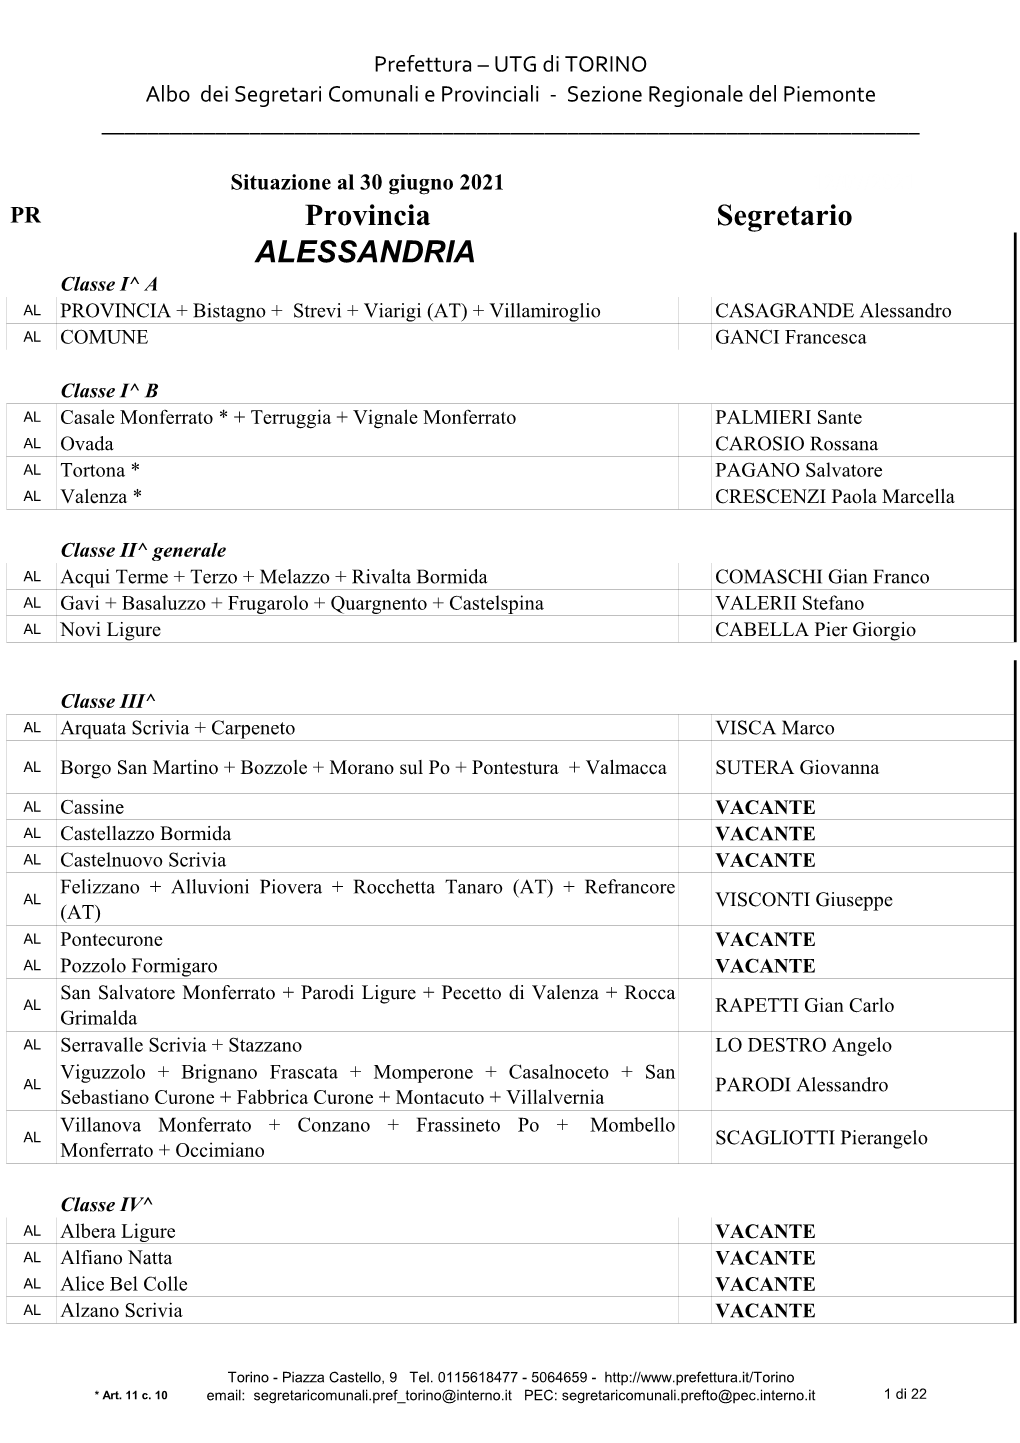 Provincia Segretario ALESSANDRIA Classe I^ a AL PROVINCIA + Bistagno + Strevi + Viarigi (AT) + Villamiroglio CASAGRANDE Alessandro AL COMUNE GANCI Francesca